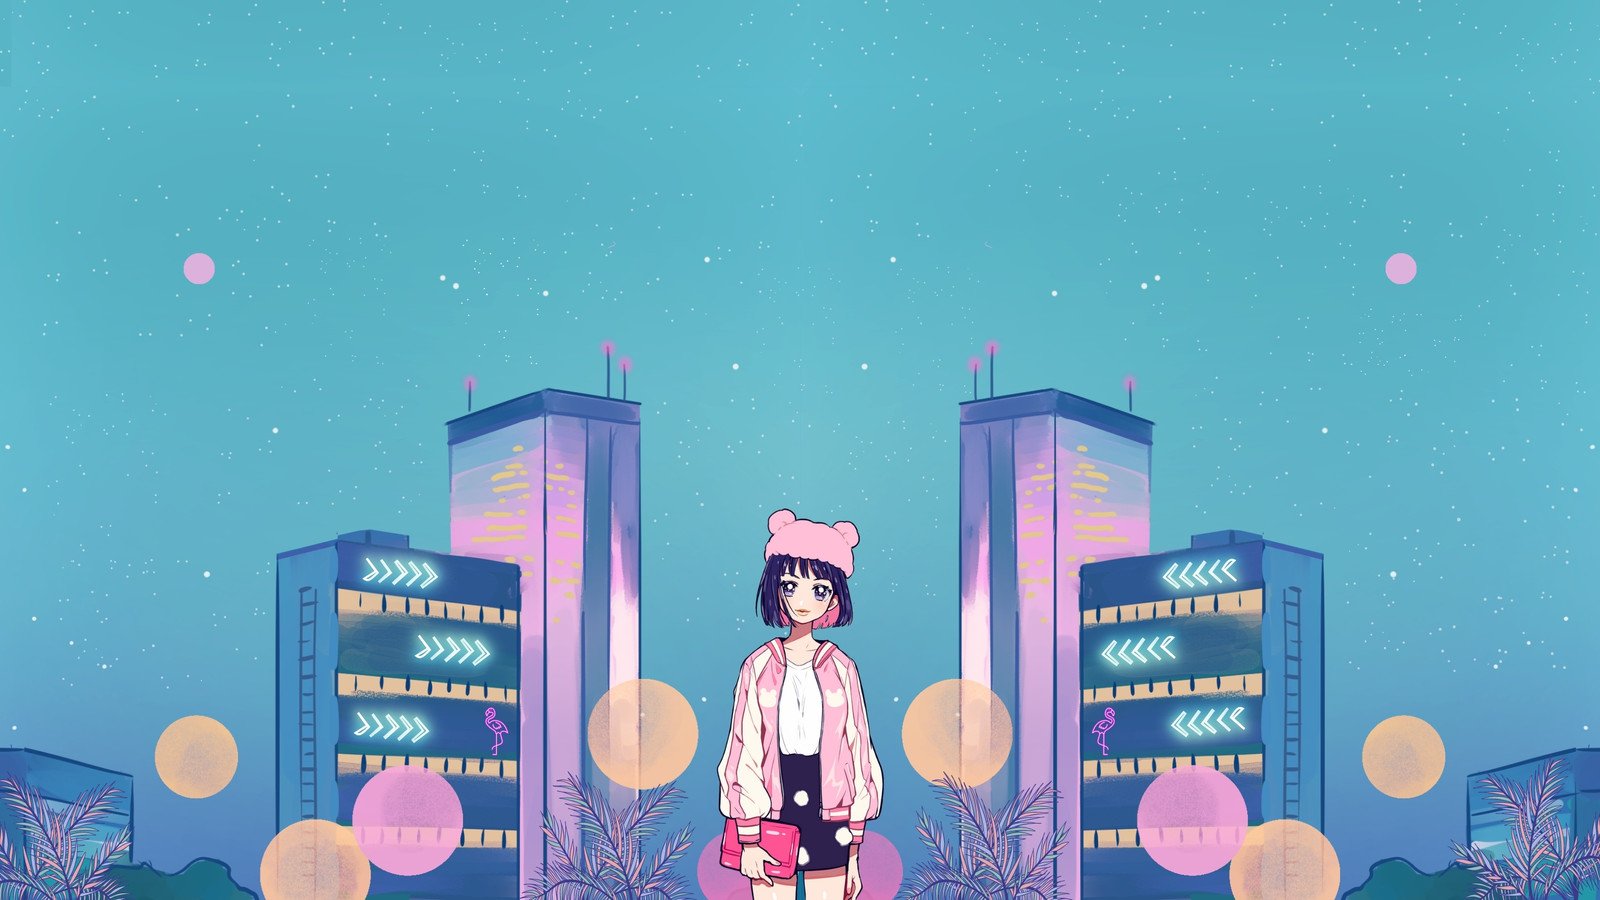 Anime Wallpapers Aesthetic by obsesseduwu on DeviantArt